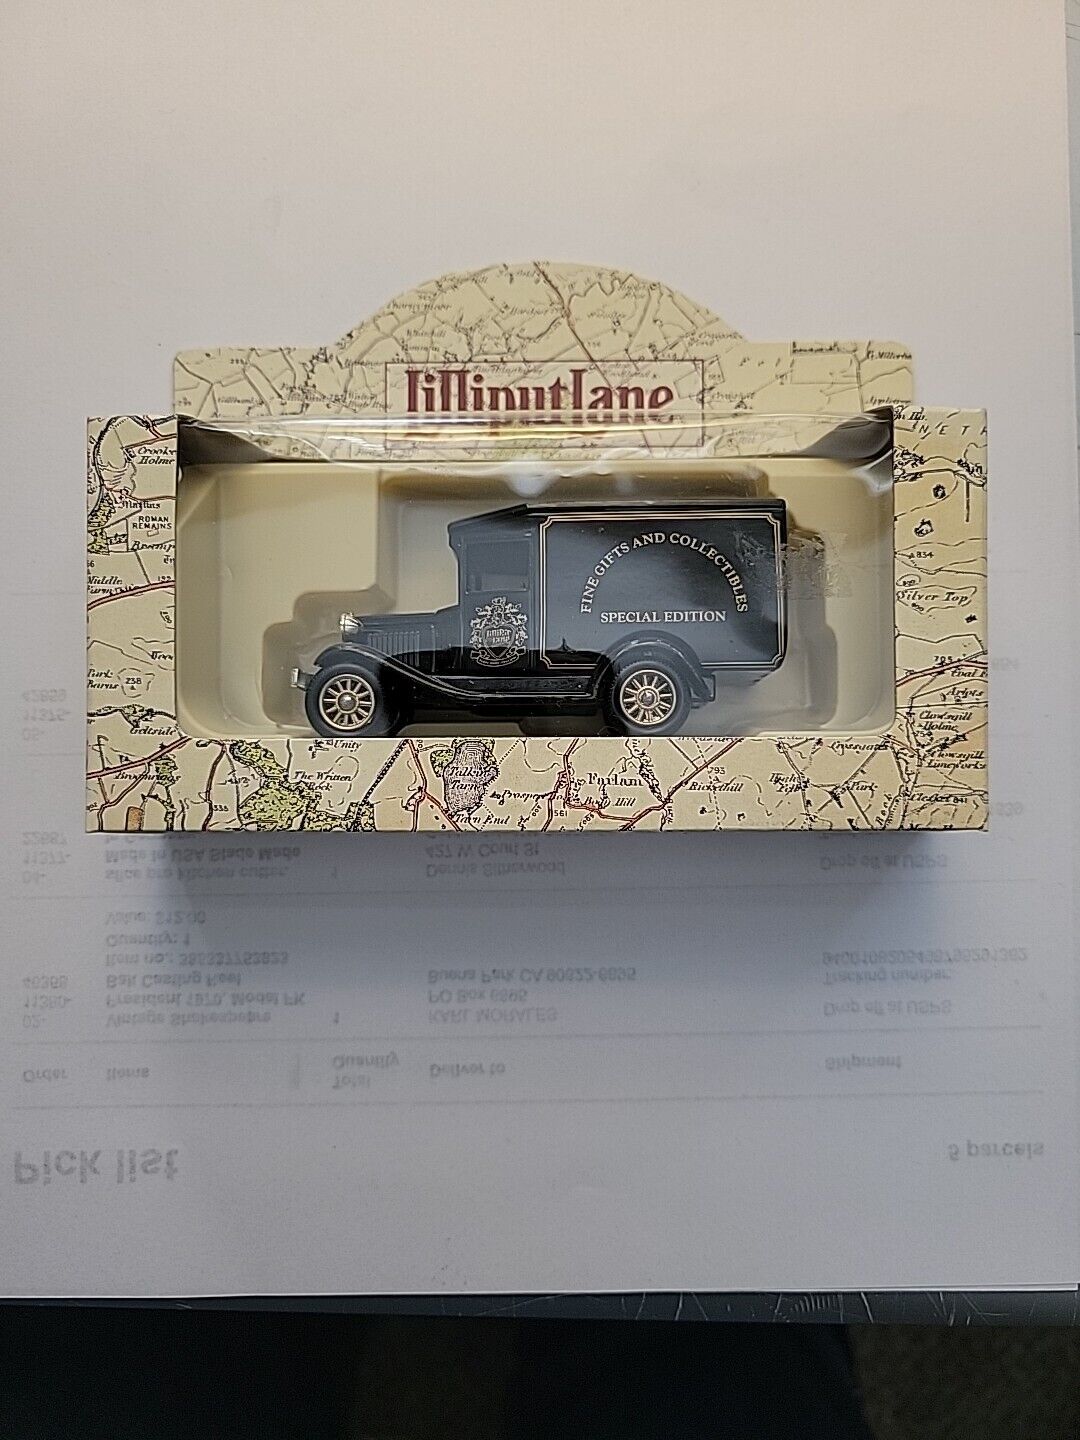 Lilliput Lane Special Edition Van - Mint in its original box.